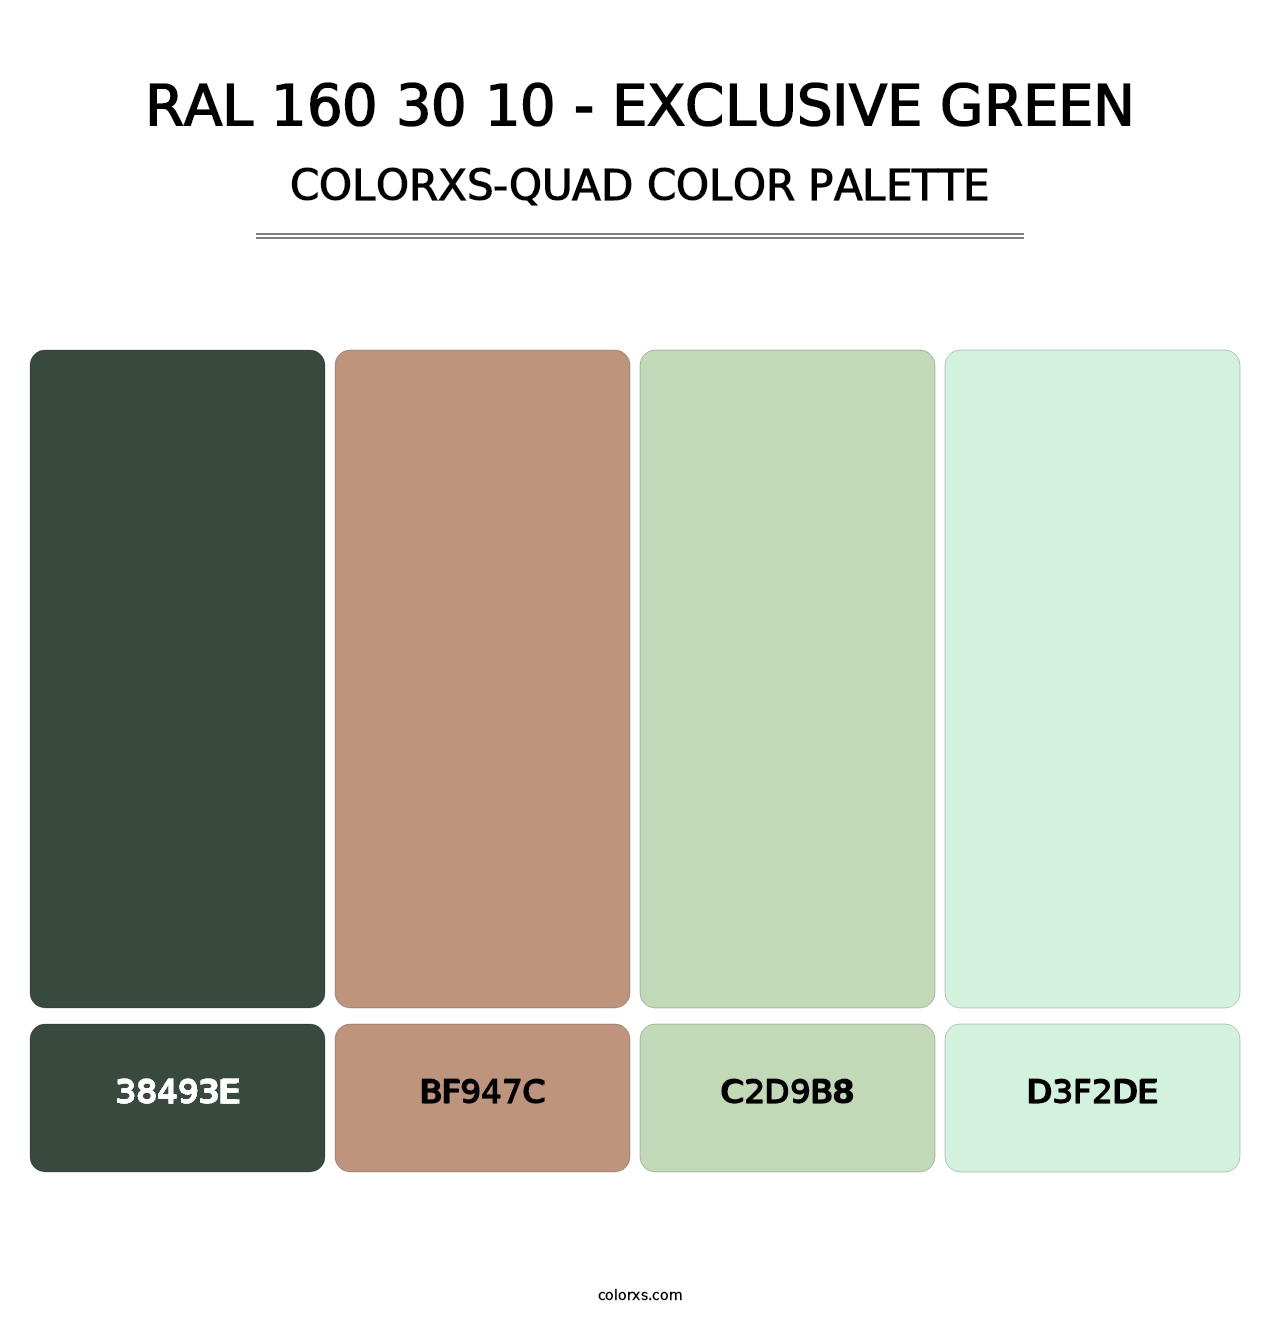 RAL 160 30 10 - Exclusive Green - Colorxs Quad Palette